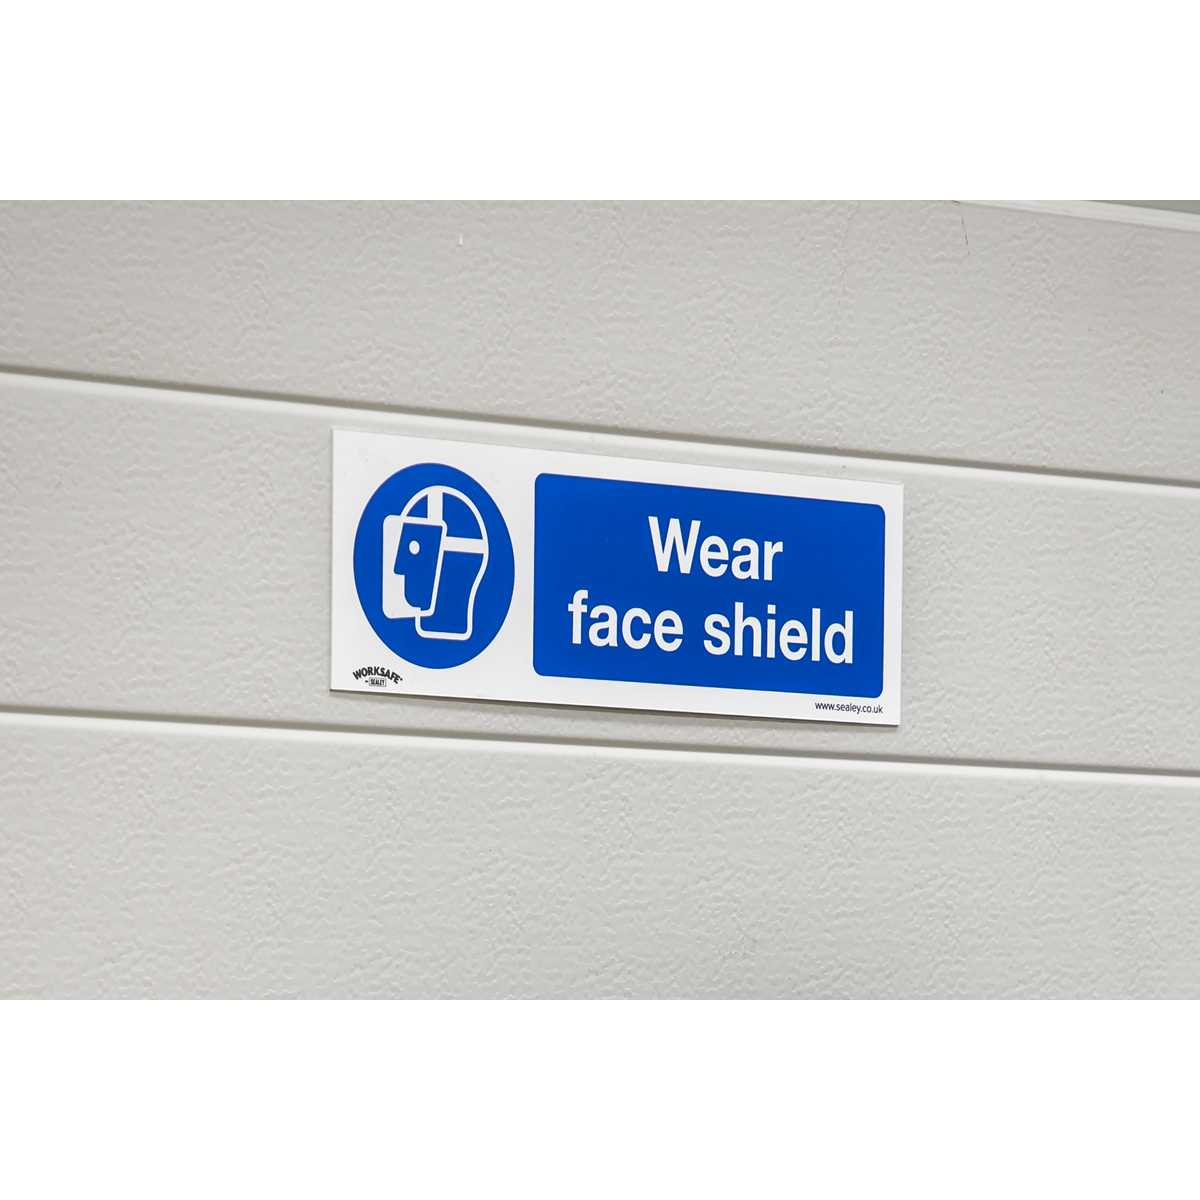 Mandatory Safety Sign - Wear Face Shield - Self-Adhesive Vinyl